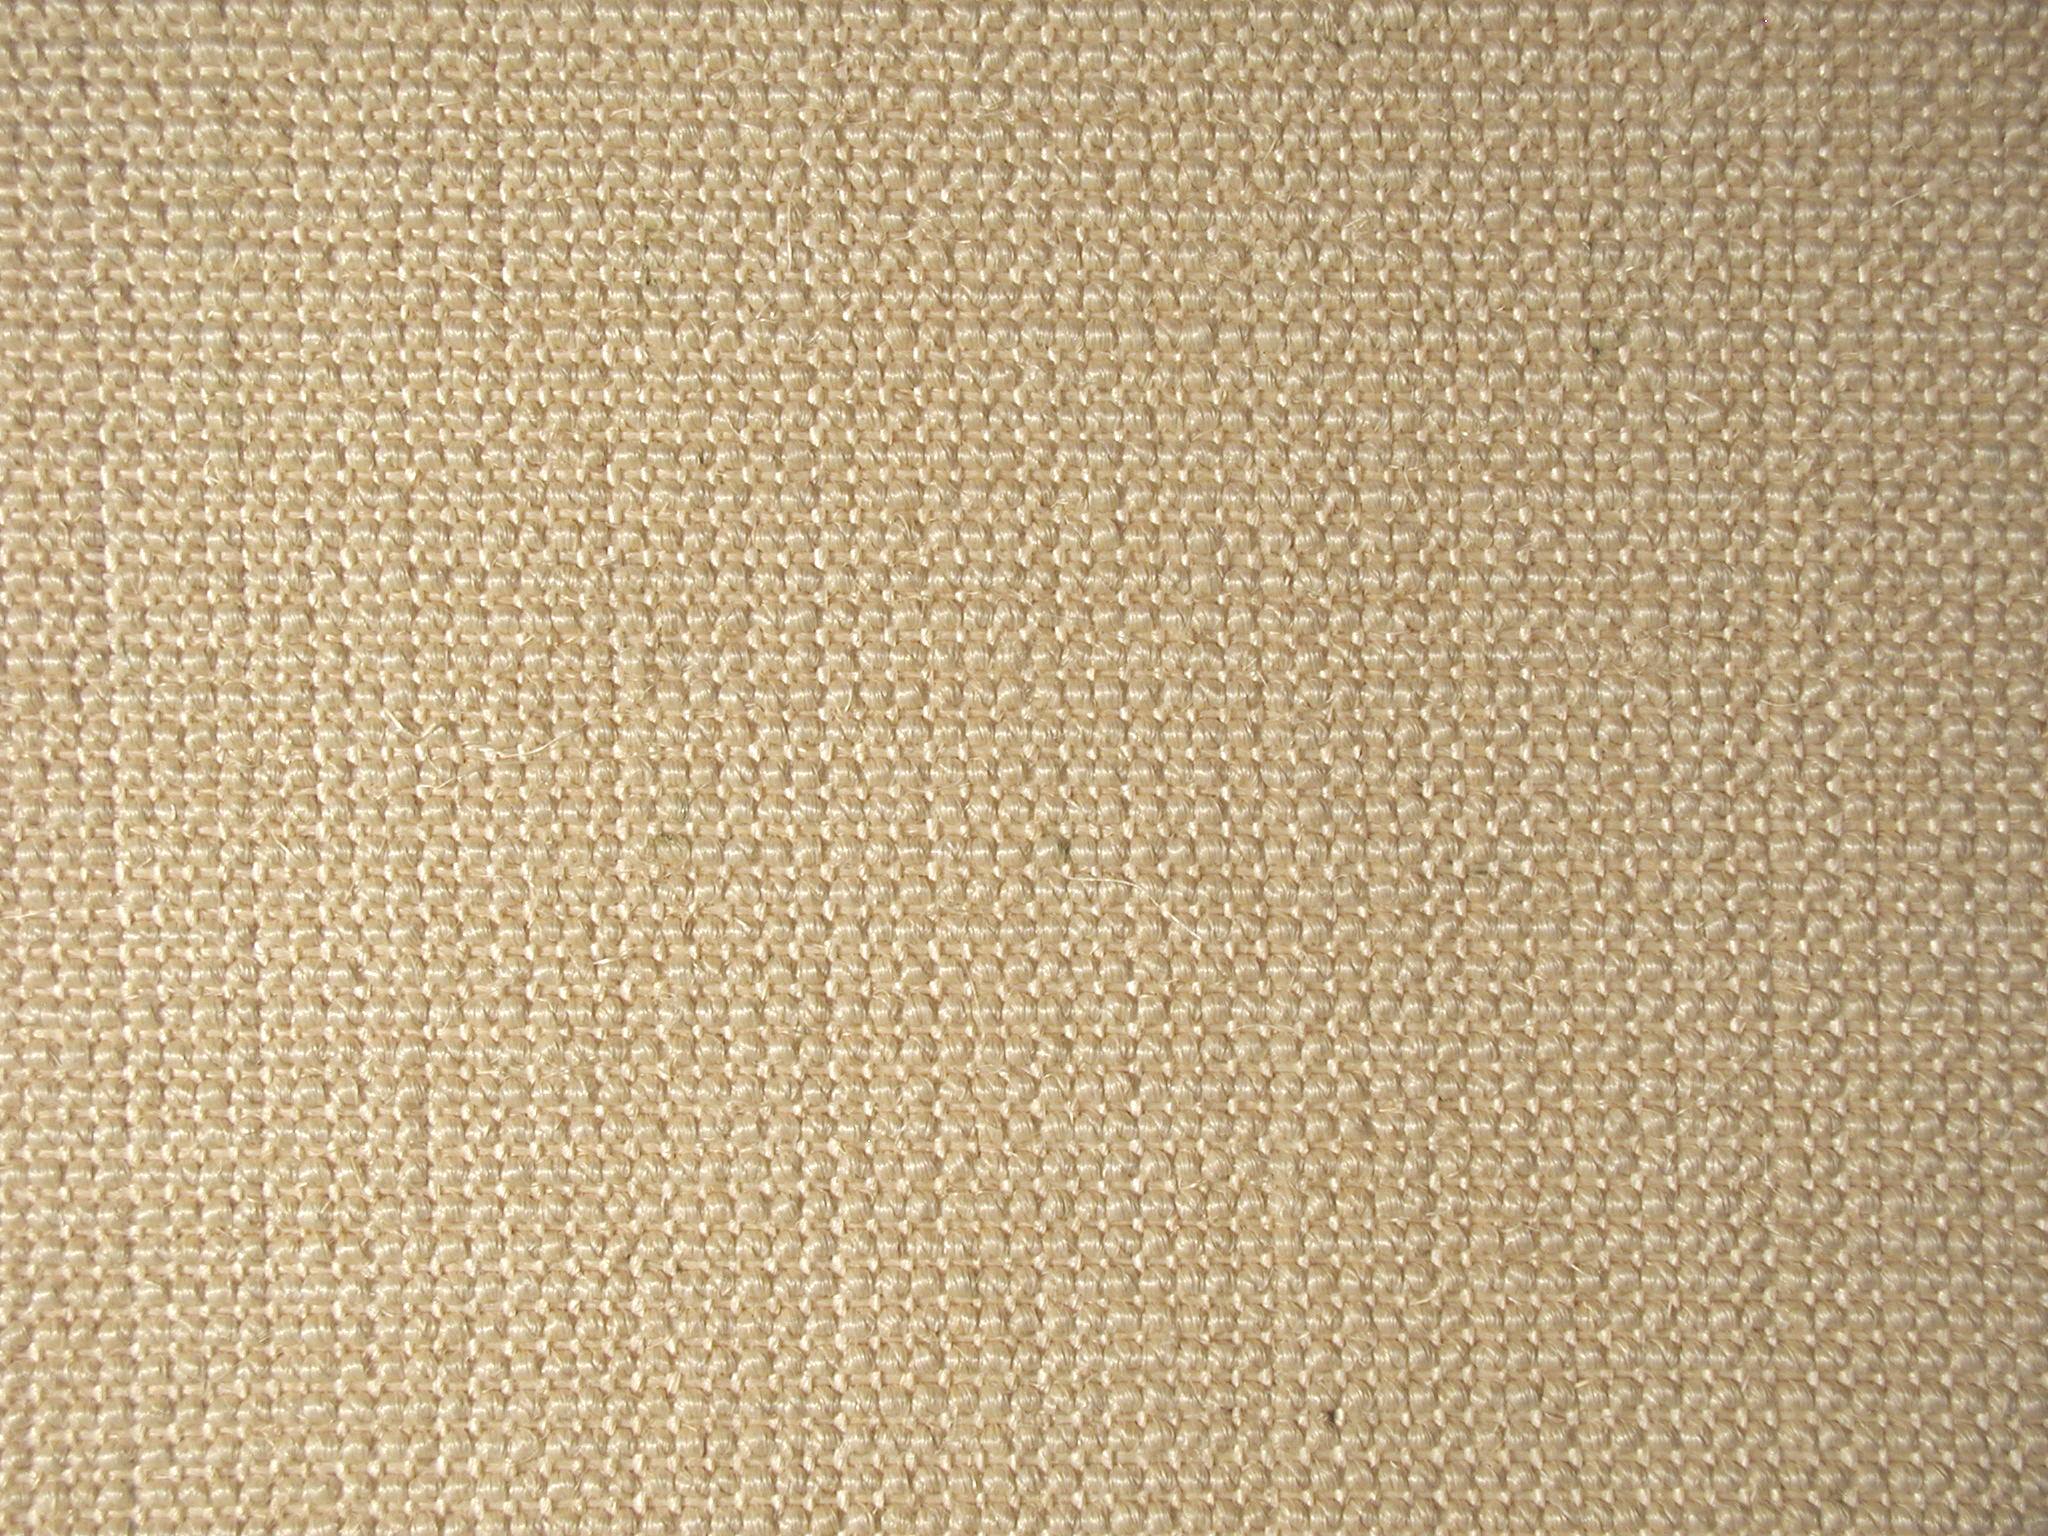 Modern Carpet Tiles Texture Trendy Image Galleries